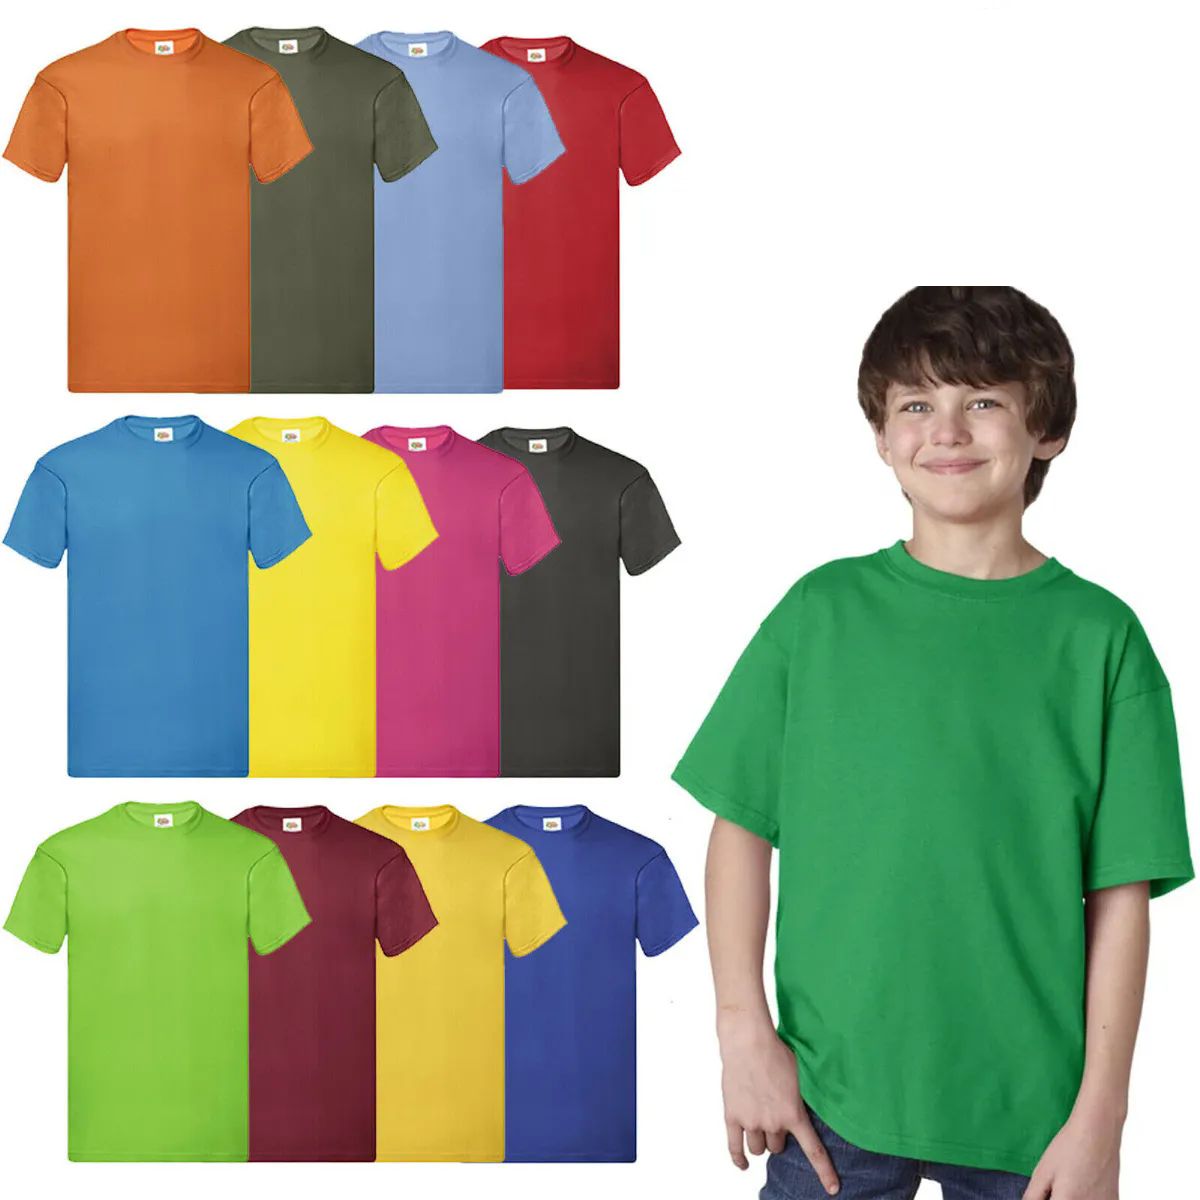 144 Wholesale Billion Hats Kids Youth Cotton Assorted Colors T Shirts Size XL